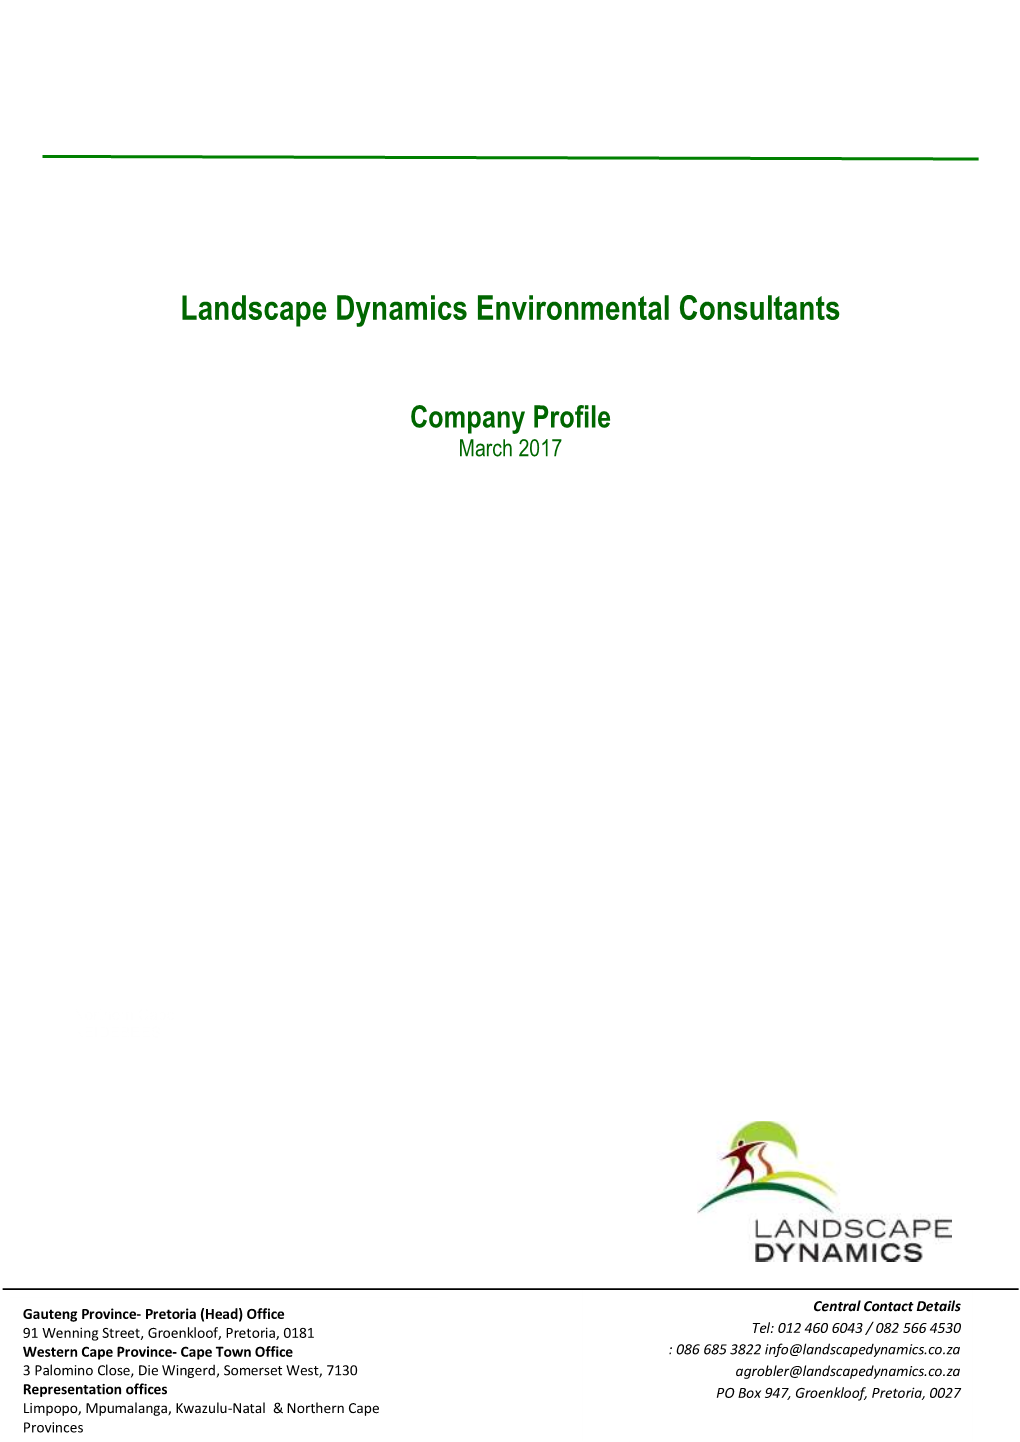 Landscape Dynamics Environmental Consultants